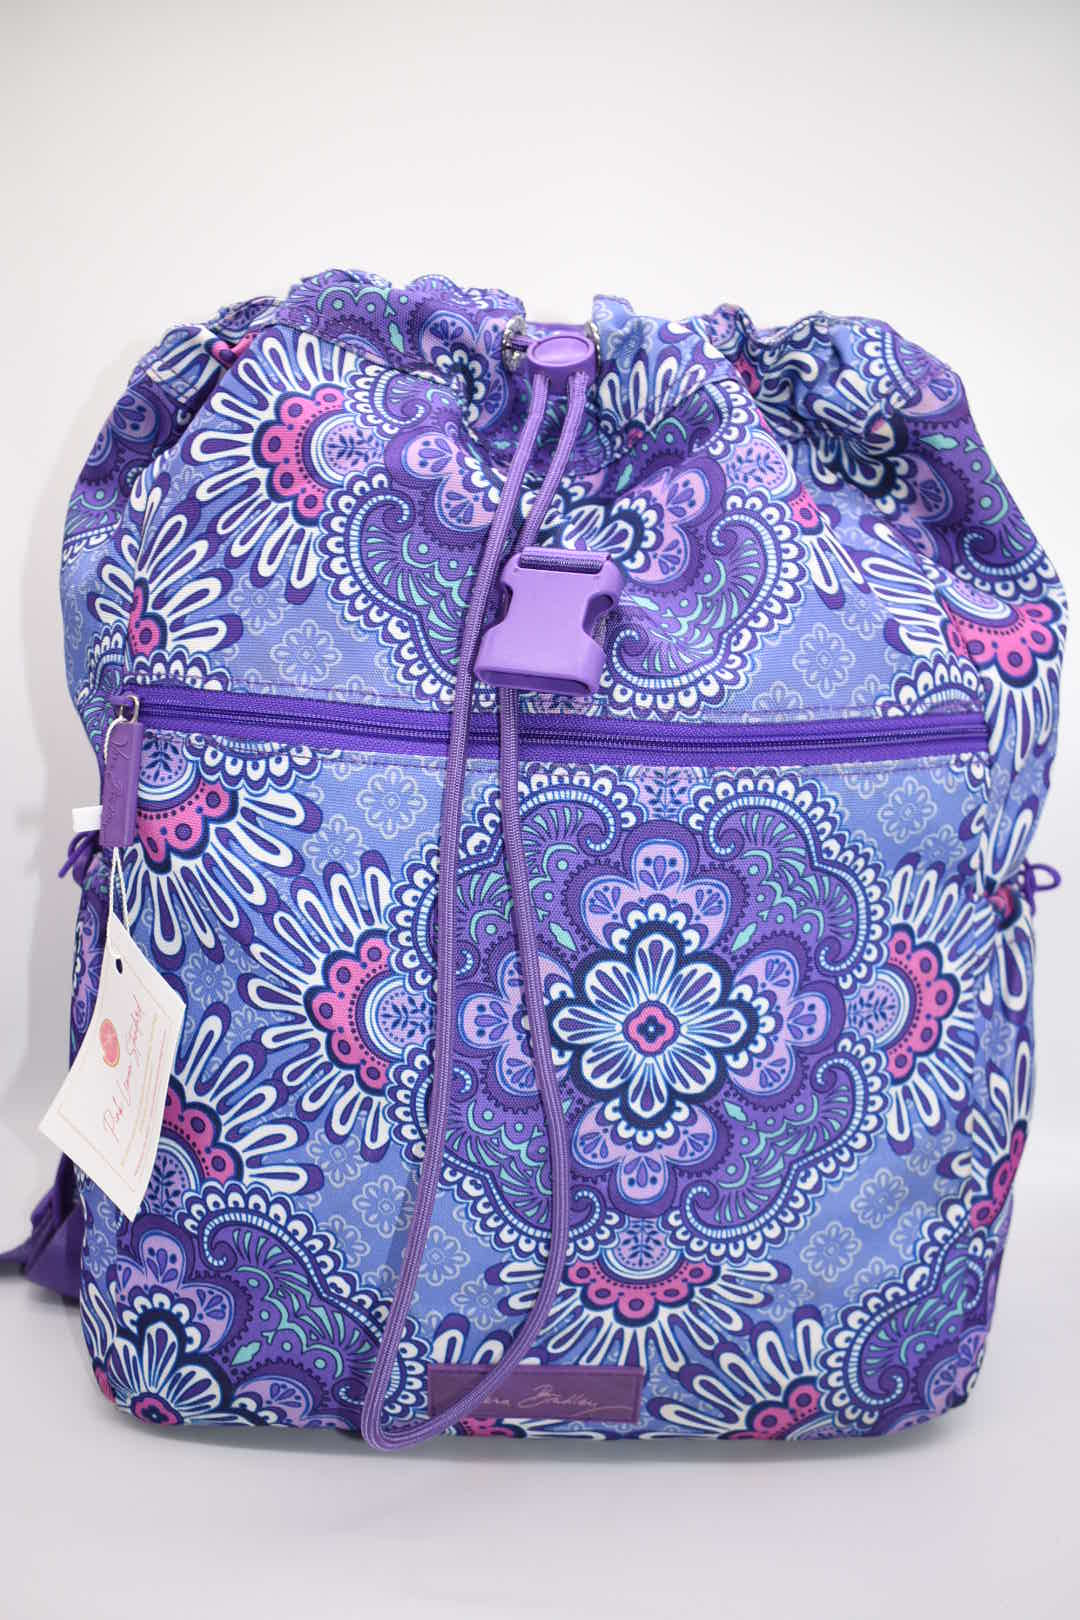 Vera Bradley Lighten Up Drawstring Backpack in "Lilac Tapestry" Pattern